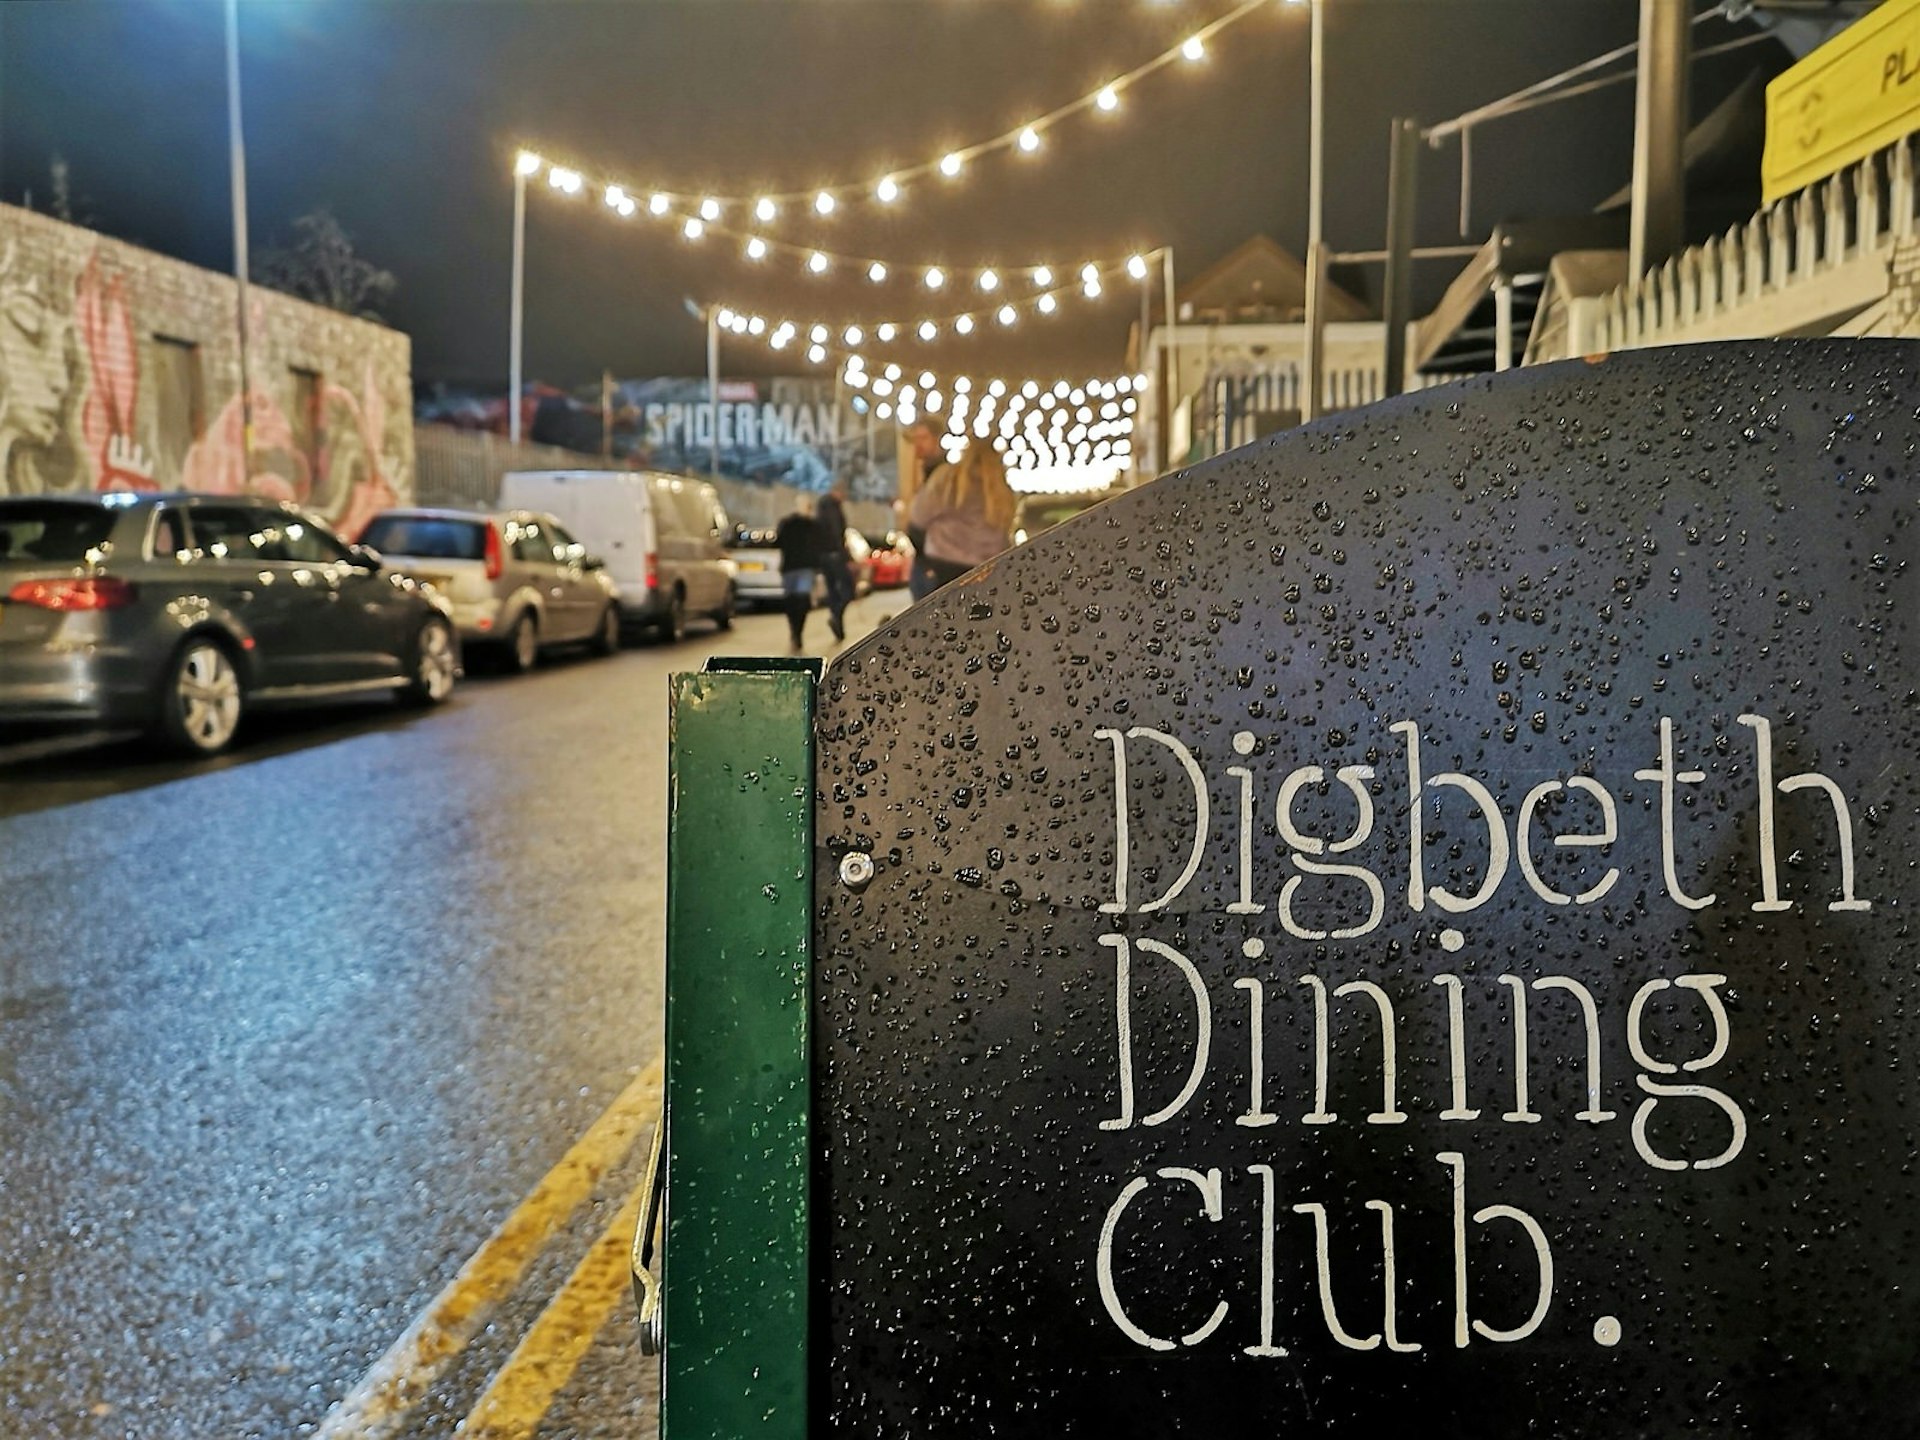 Roadside sign promoting Digbeth Dining Club's street food market.